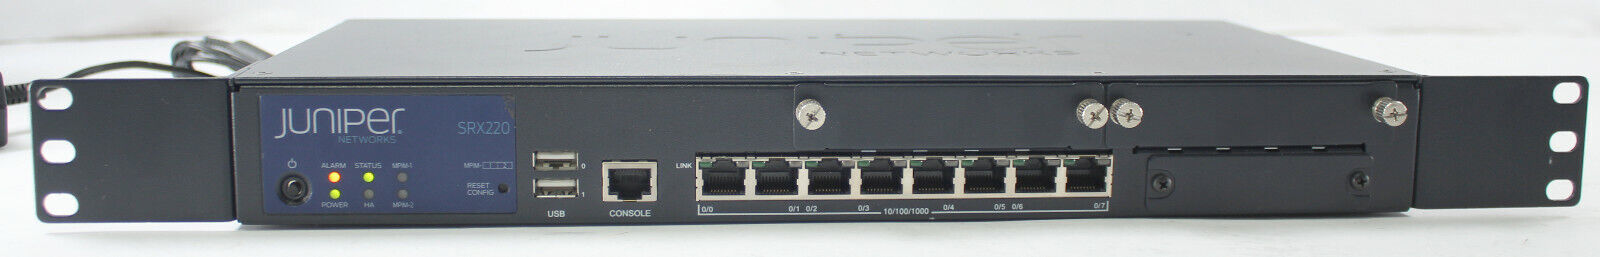 SRX220H2 Juniper SRX220 Services Gateway, 8 Ethernet Ports, 1 Expansion Port